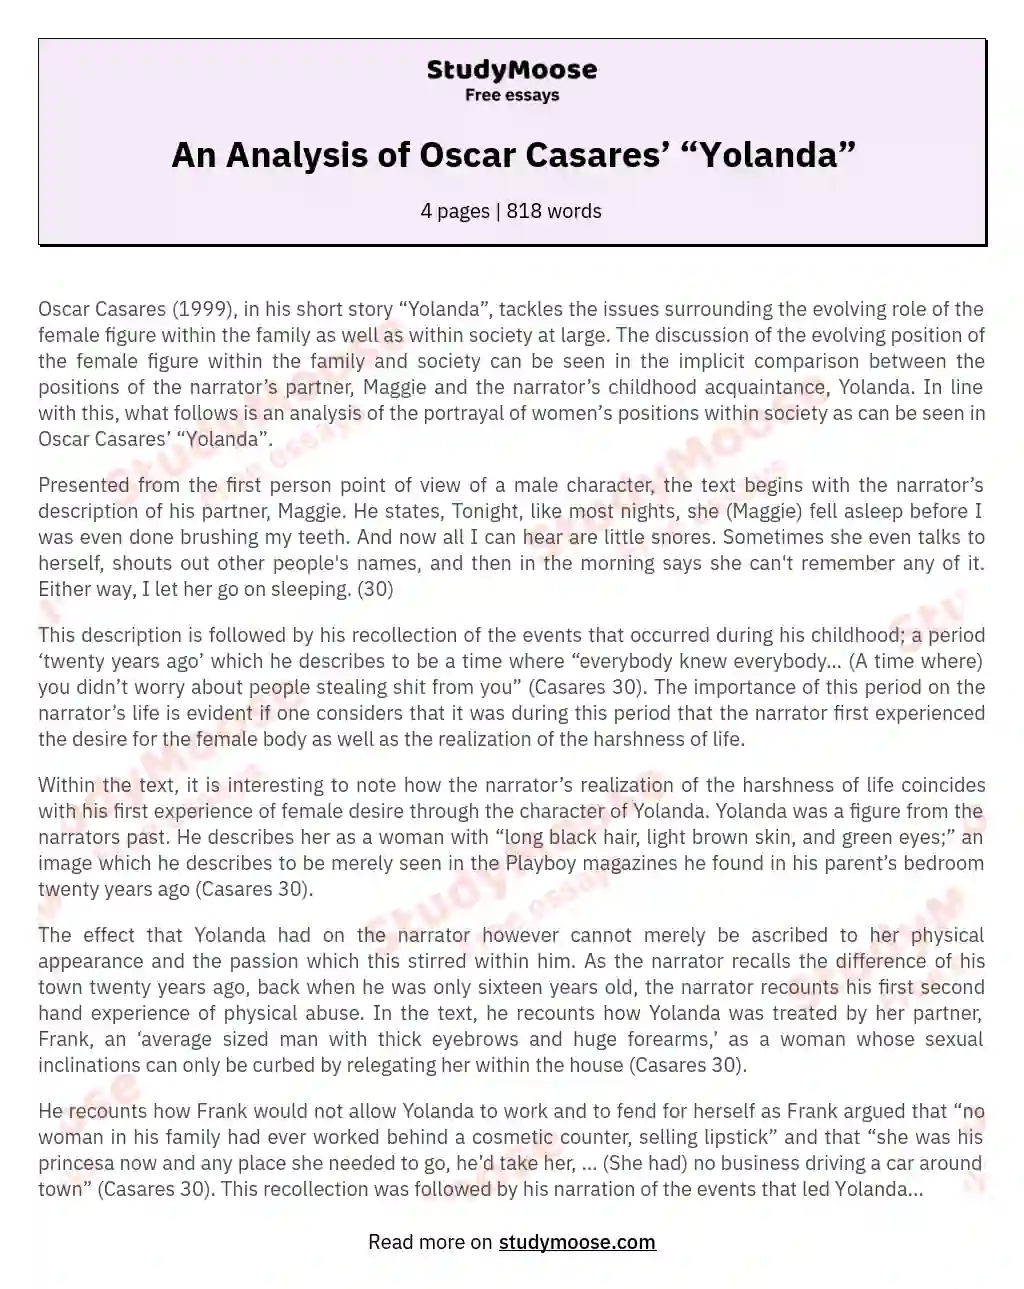 An Analysis of Oscar Casares’ “Yolanda” essay